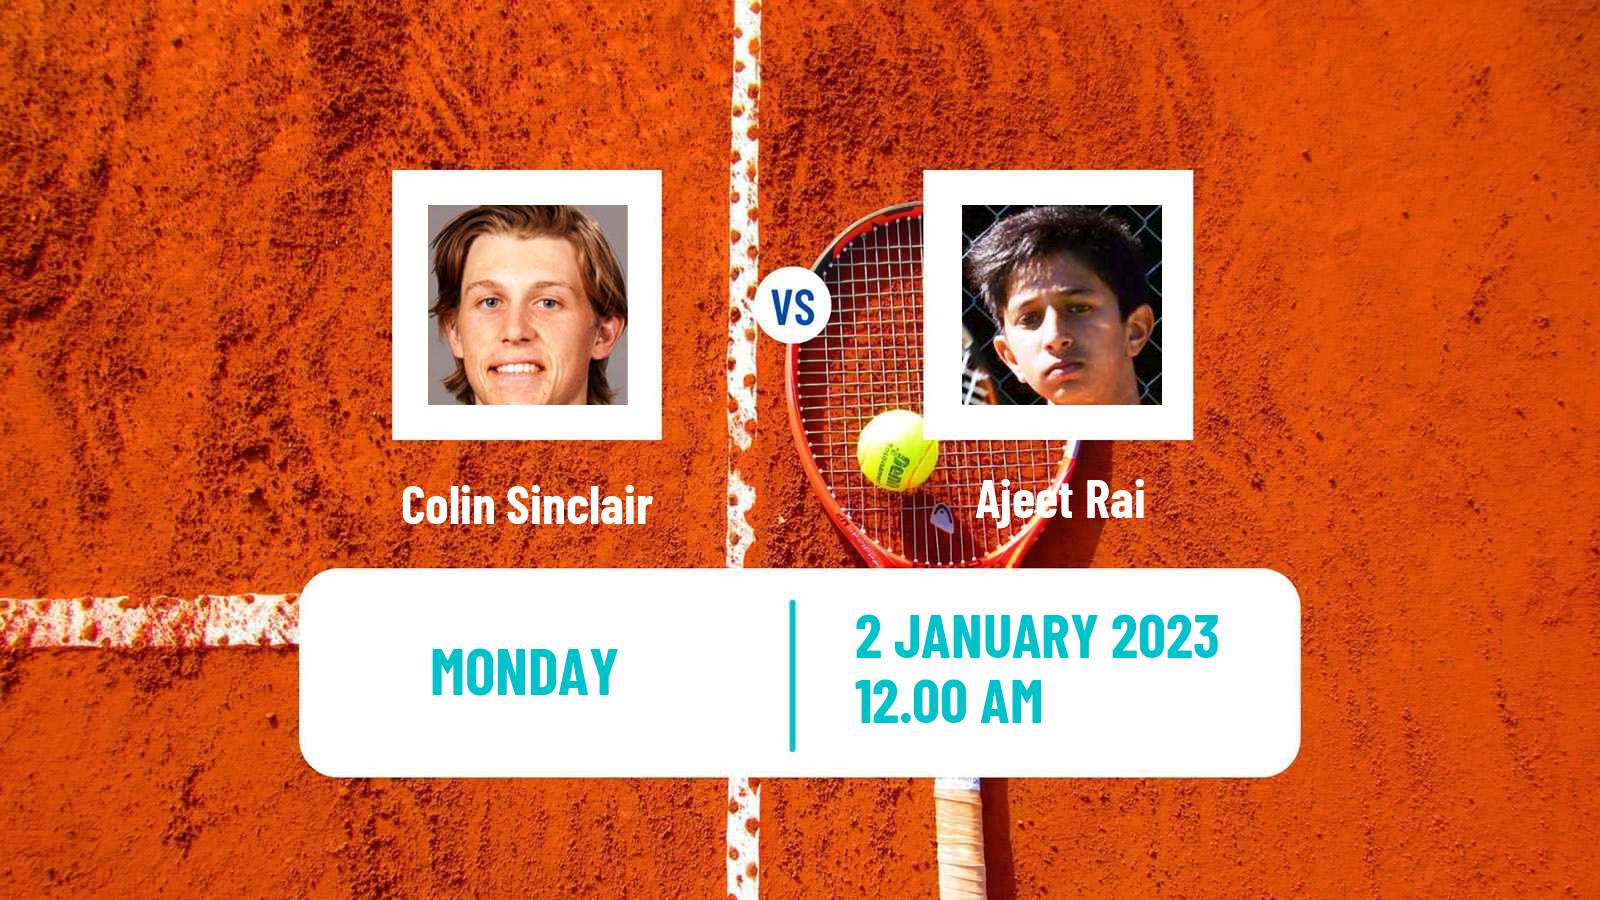 Tennis ATP Challenger Colin Sinclair - Ajeet Rai